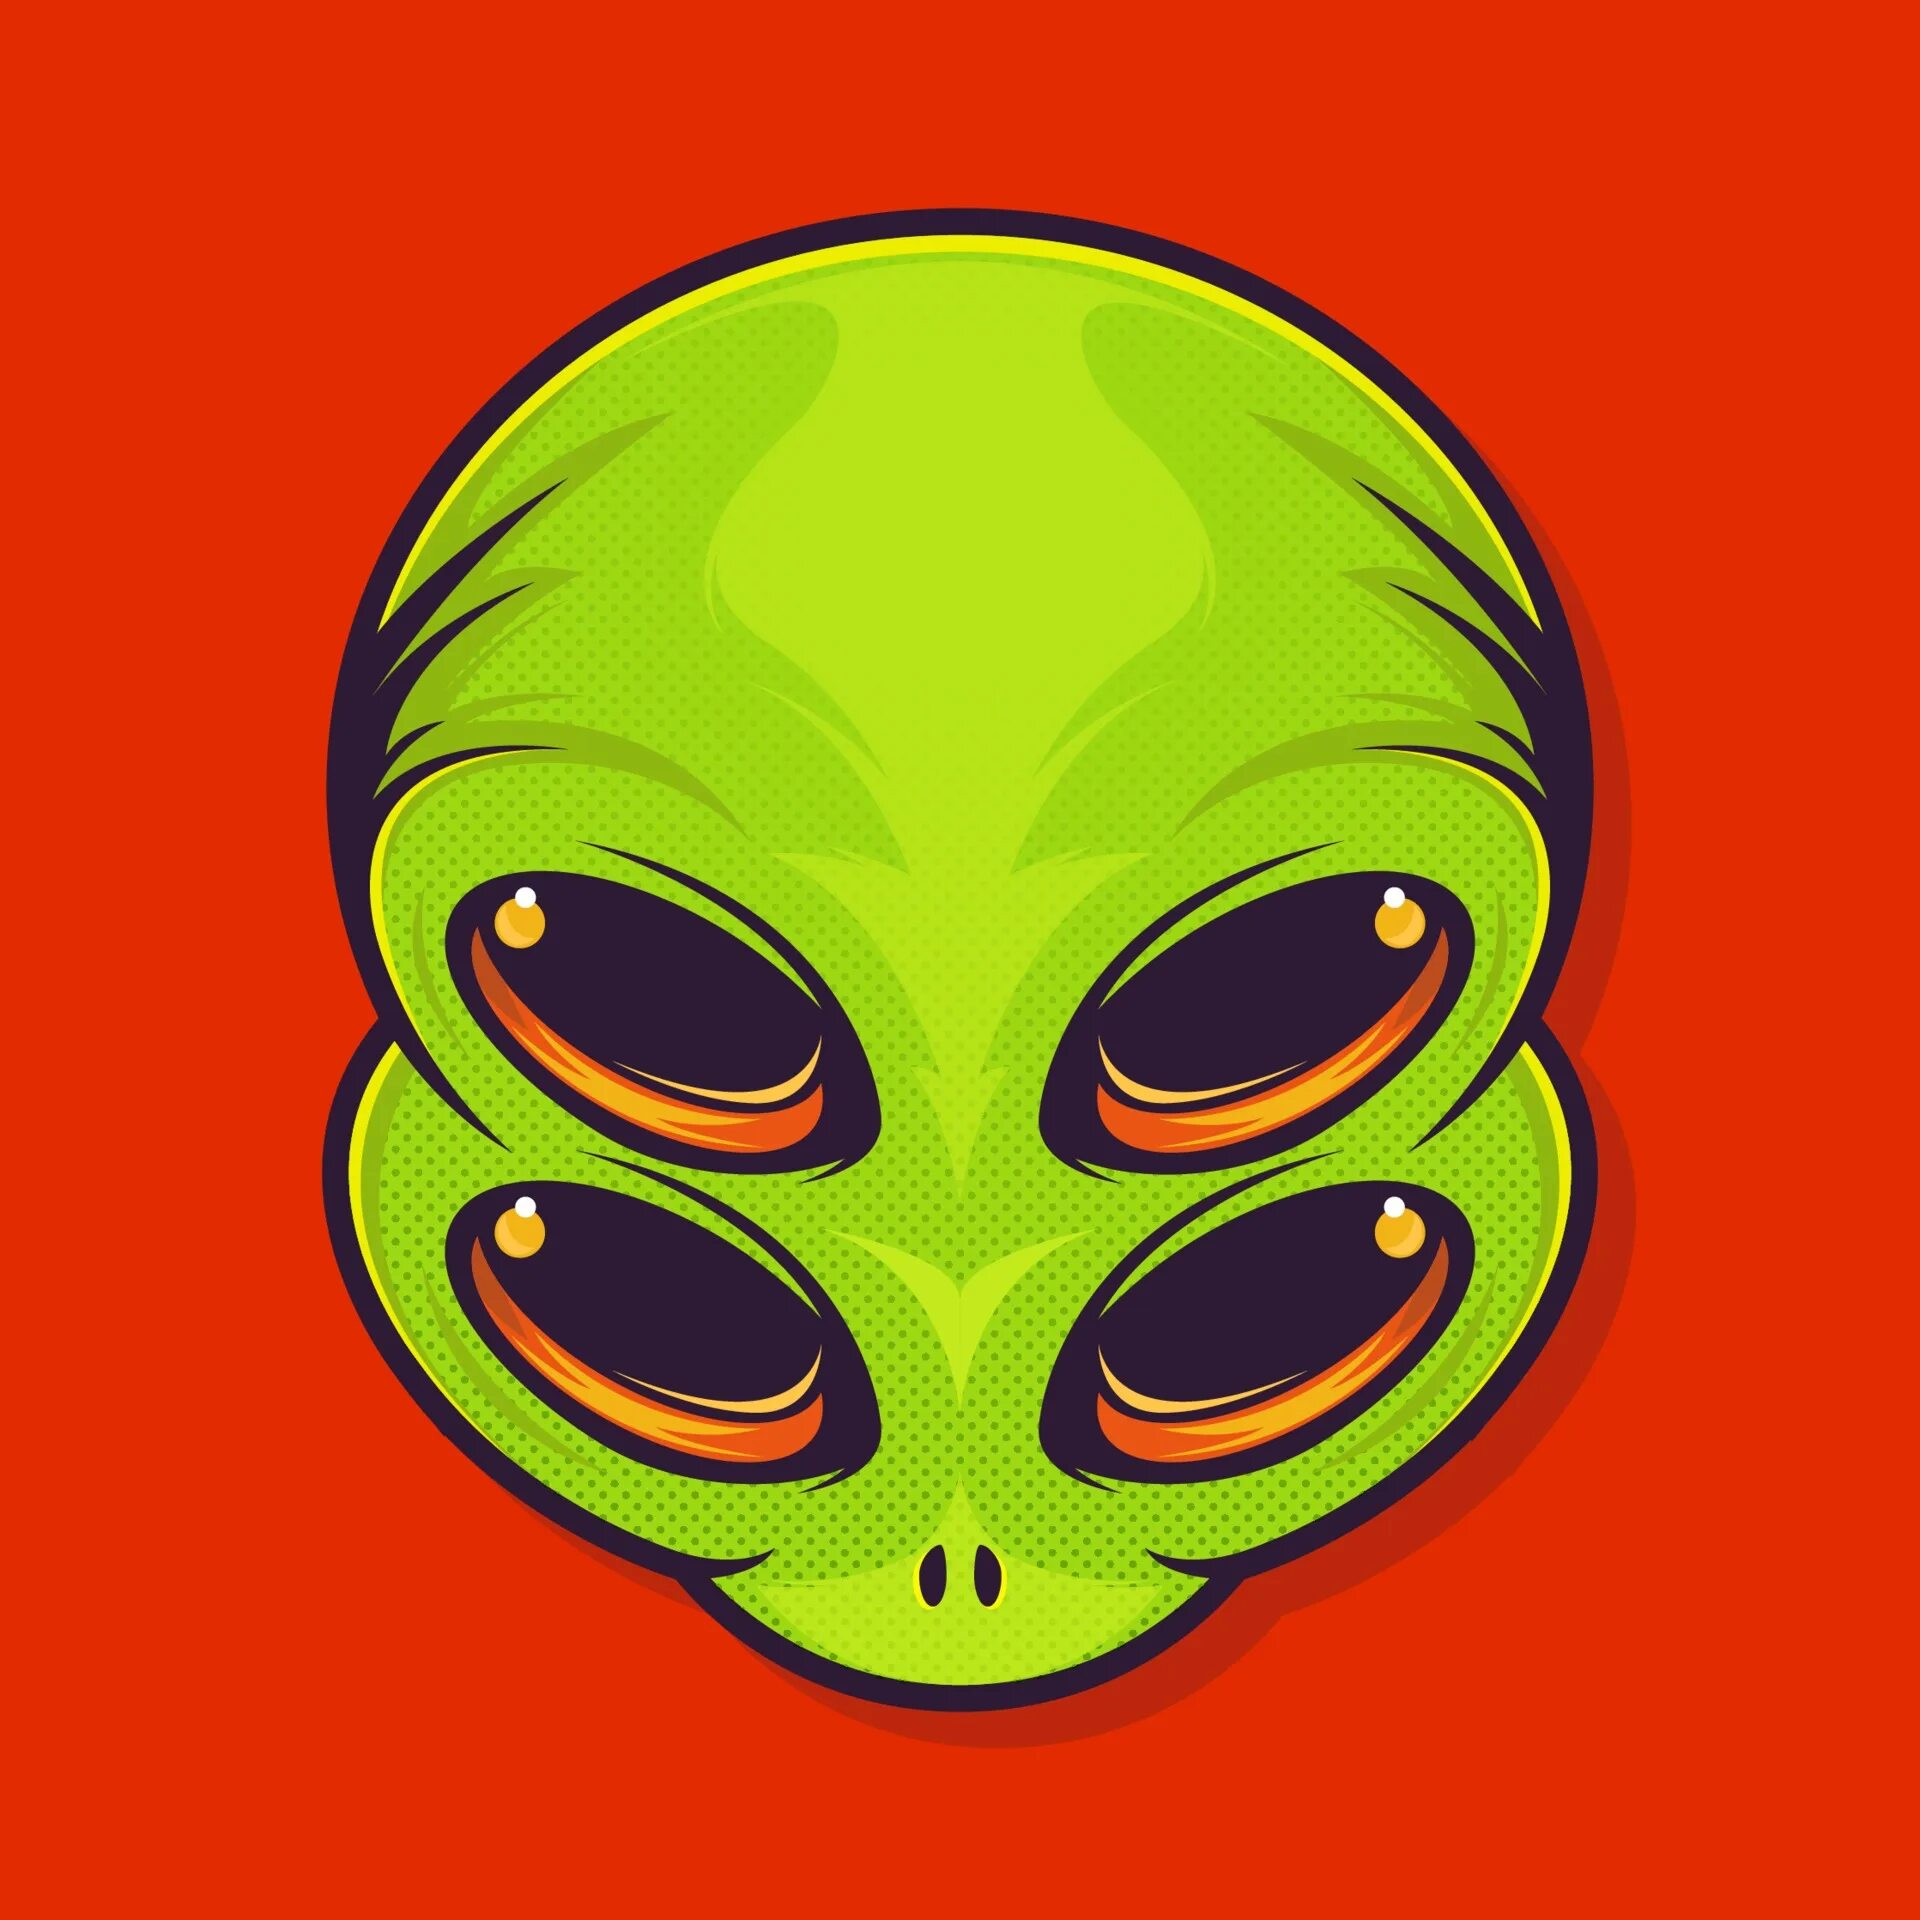 Голова пришельца. Логотип инопланетянин. Лого голова инопланетянина. Лицо пришельца лого.